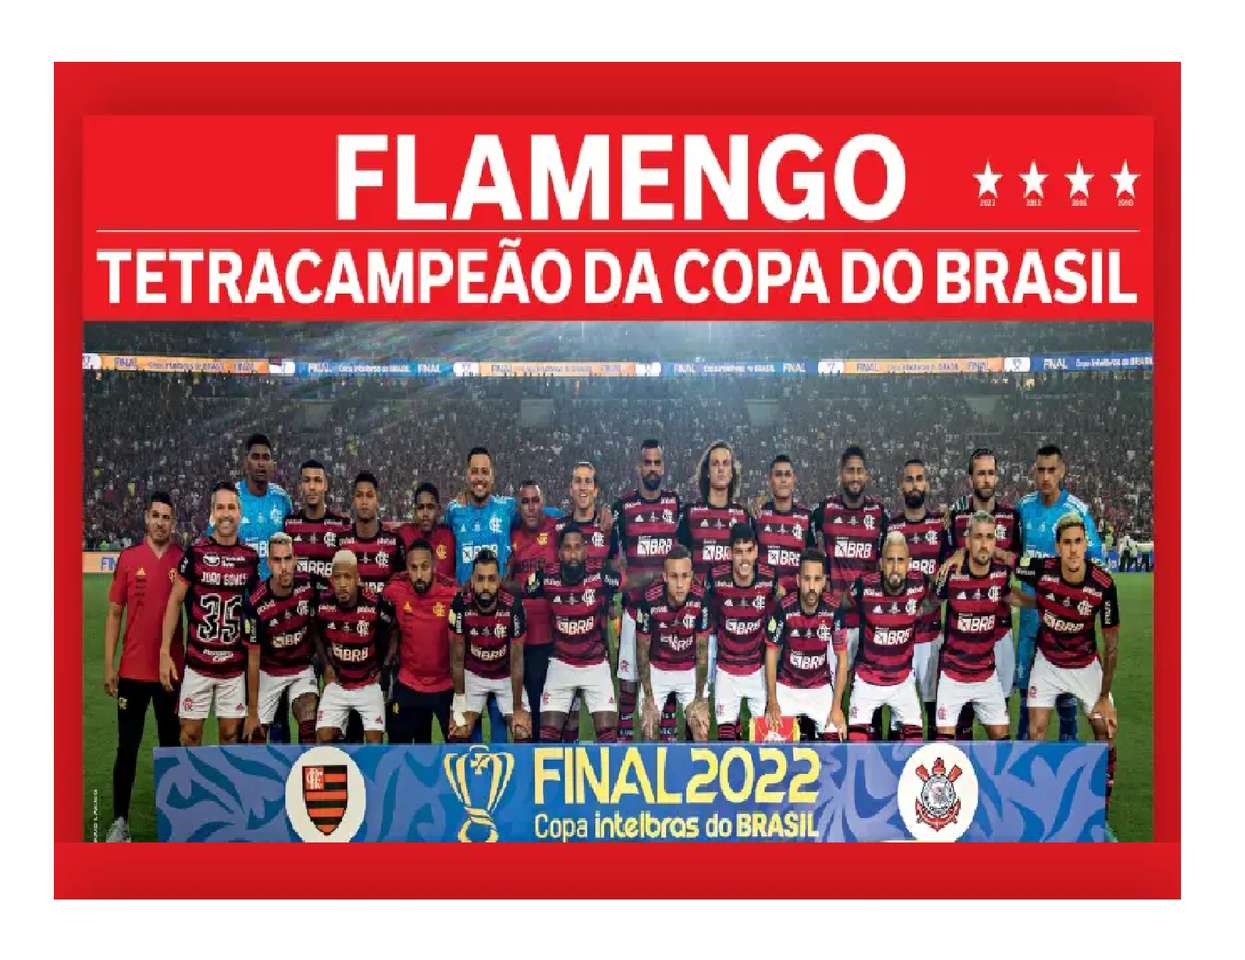 Poster Flamengo puzzle online a partir de fotografia